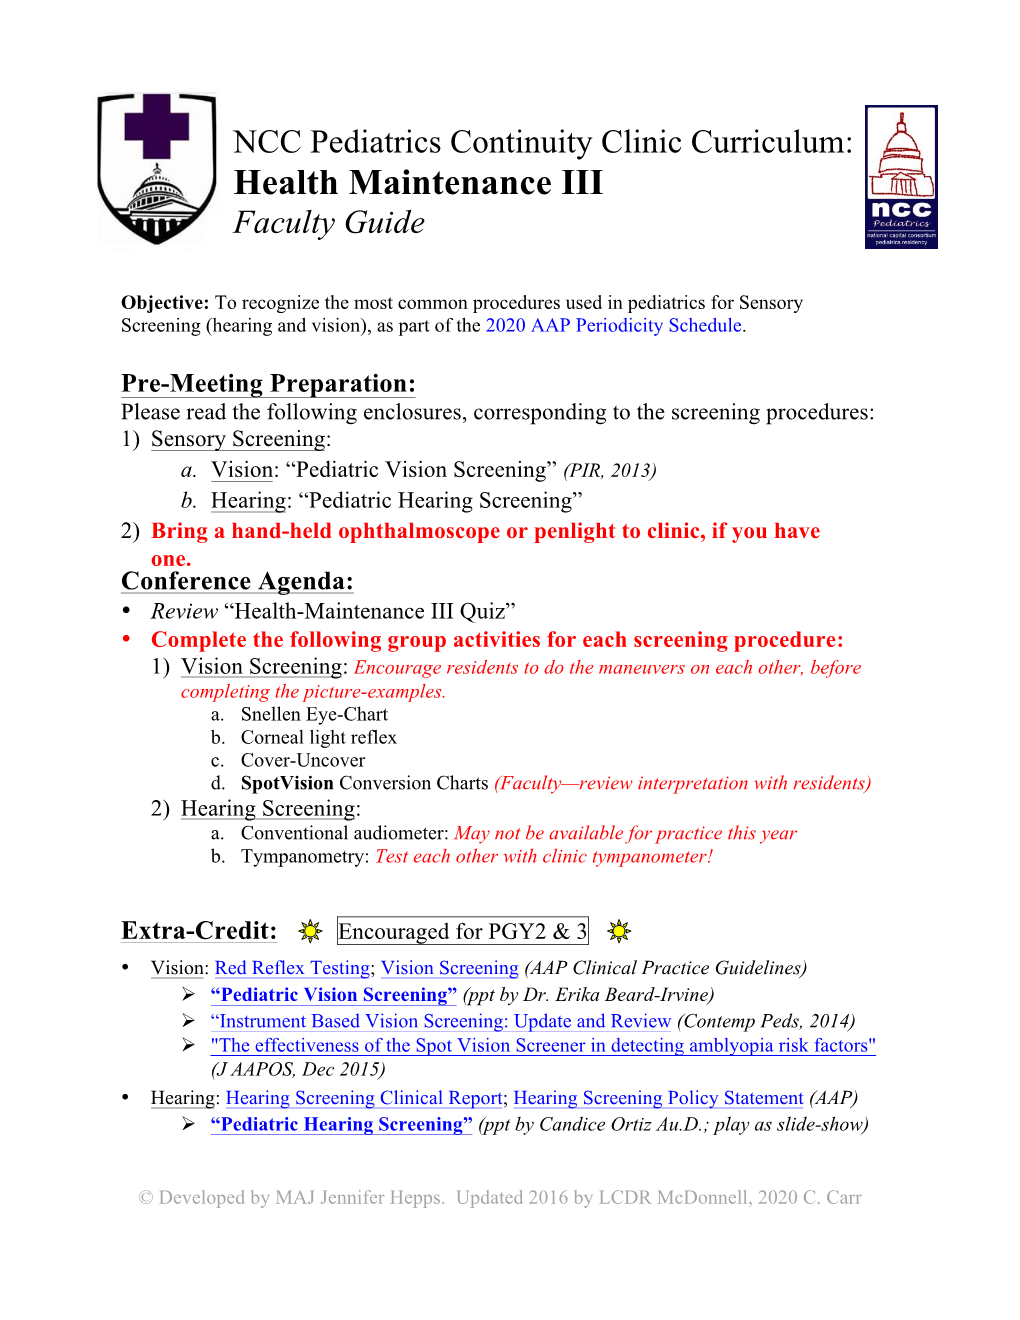 NCC Pediatrics Continuity Clinic Curriculum: Health Maintenance III Faculty Guide